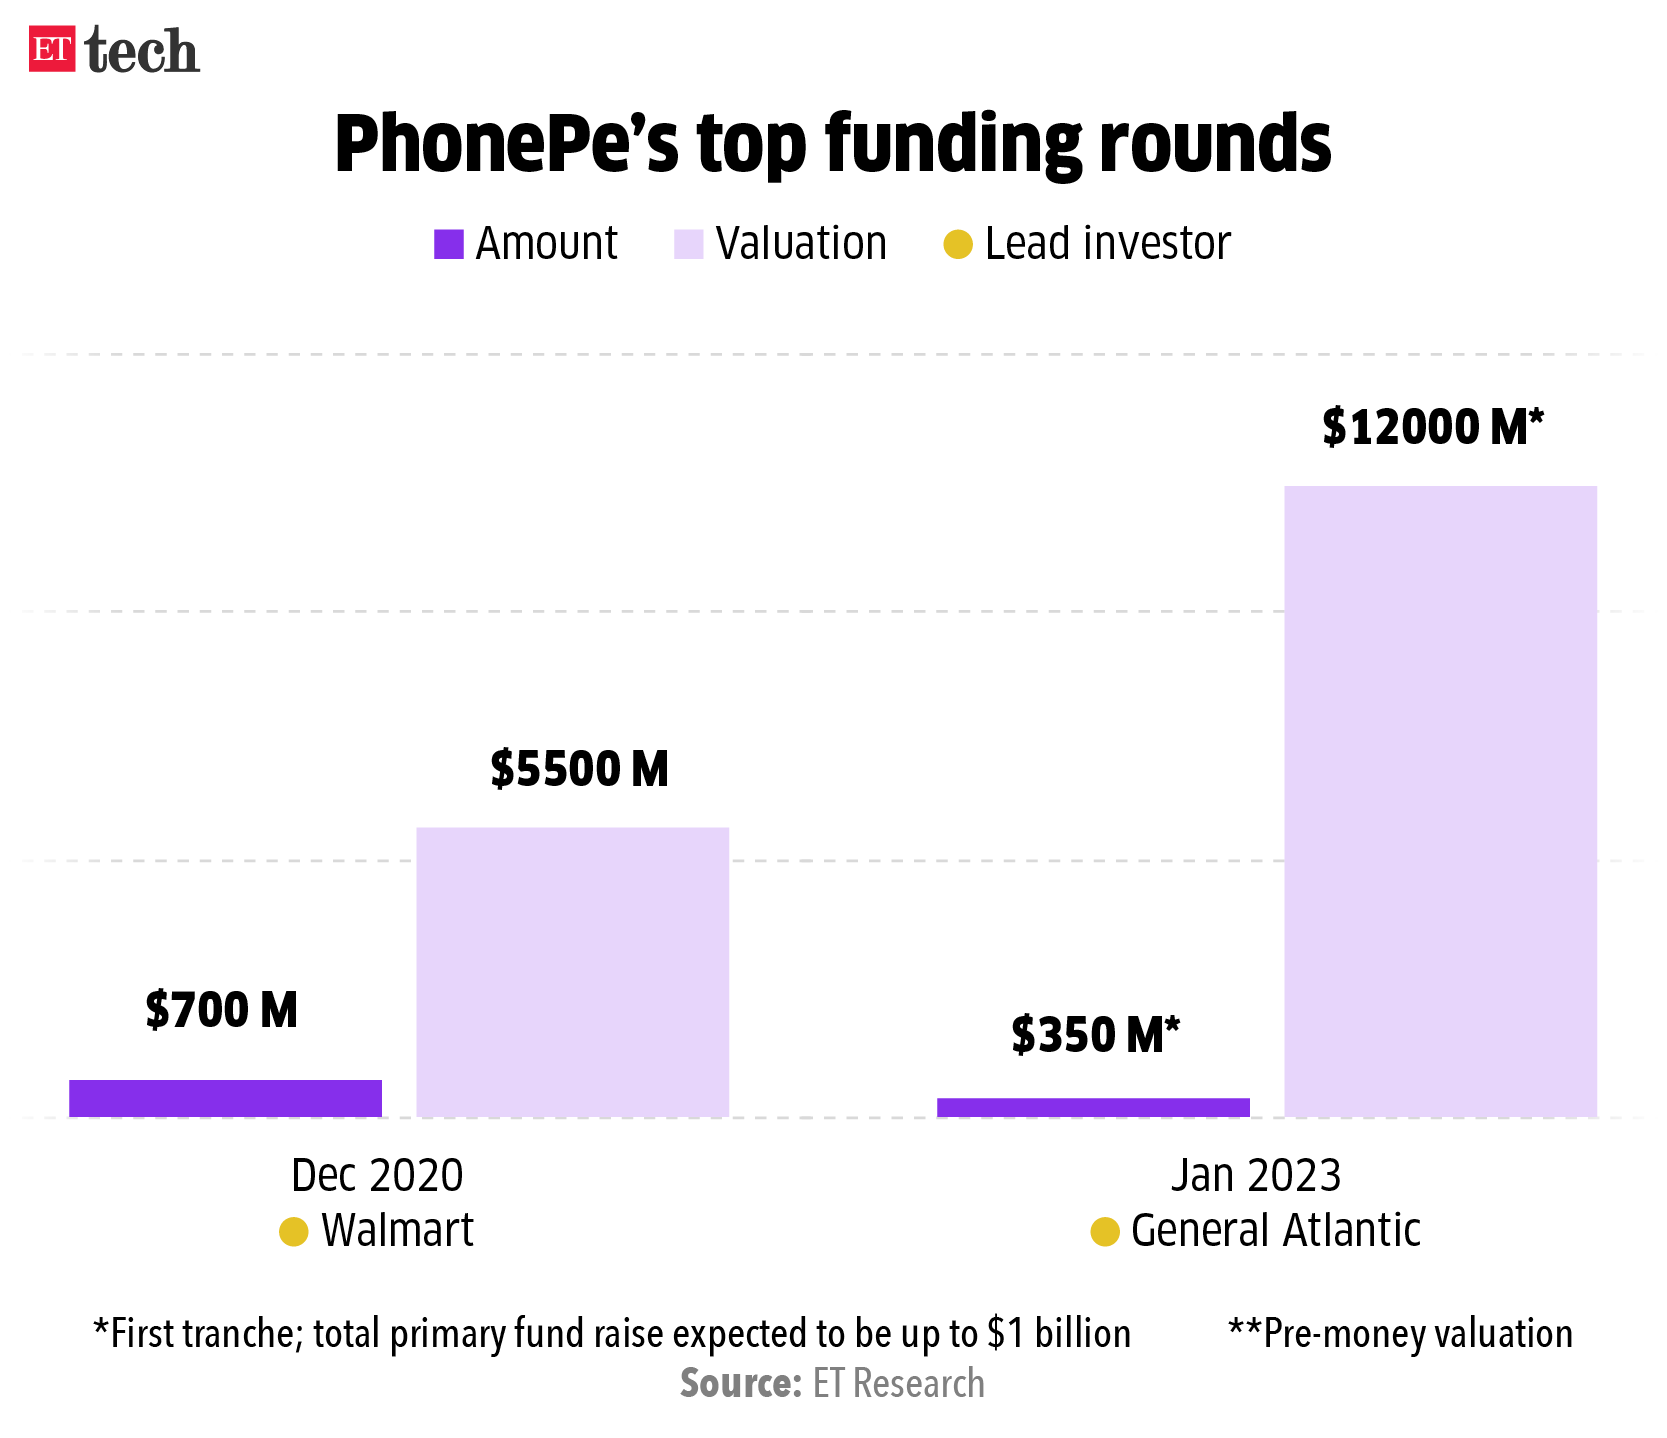 PhonePe's top funding